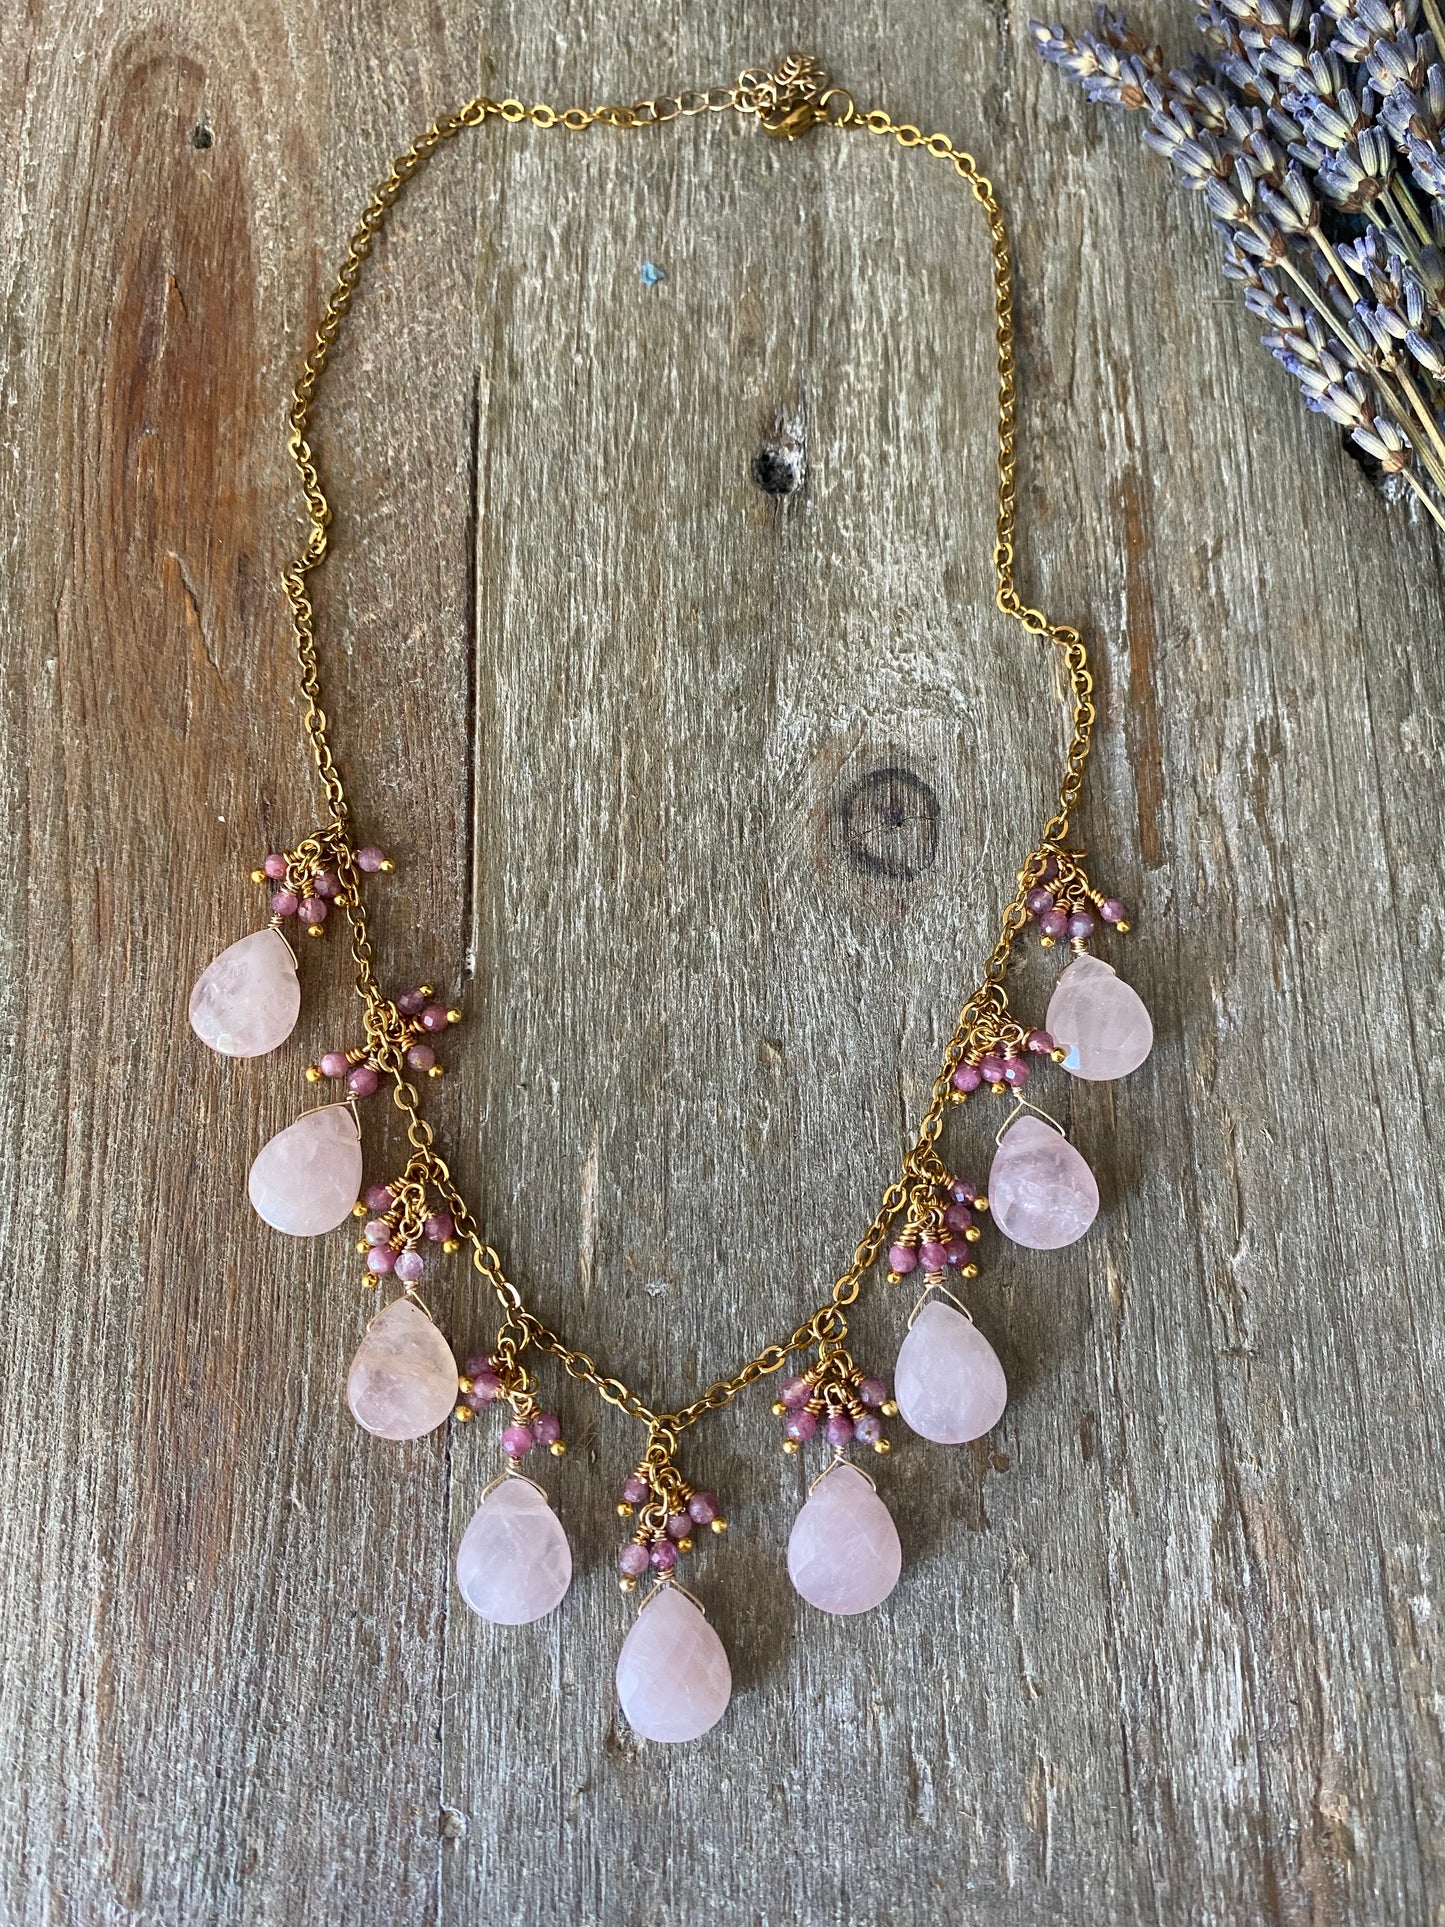 Rose quartz teardrop stone, pink tourmaline stone,gold necklace, jewelry